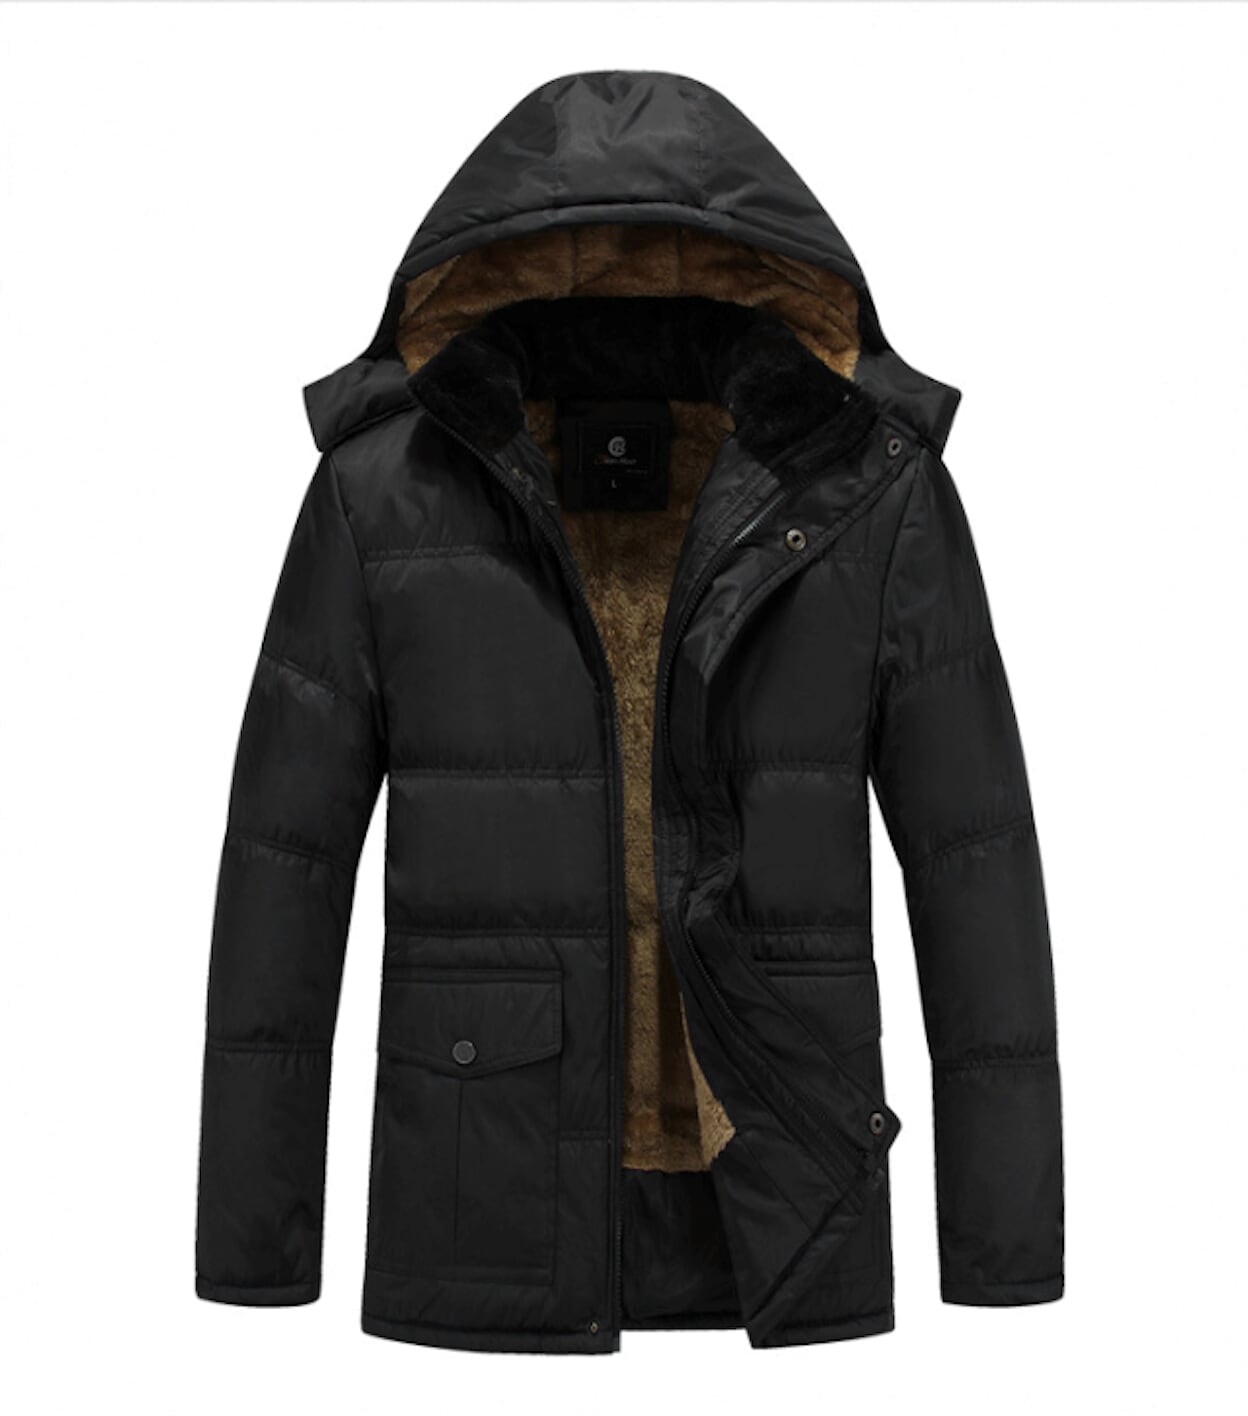 Mens Inner Fur Coat with Detachable Hood